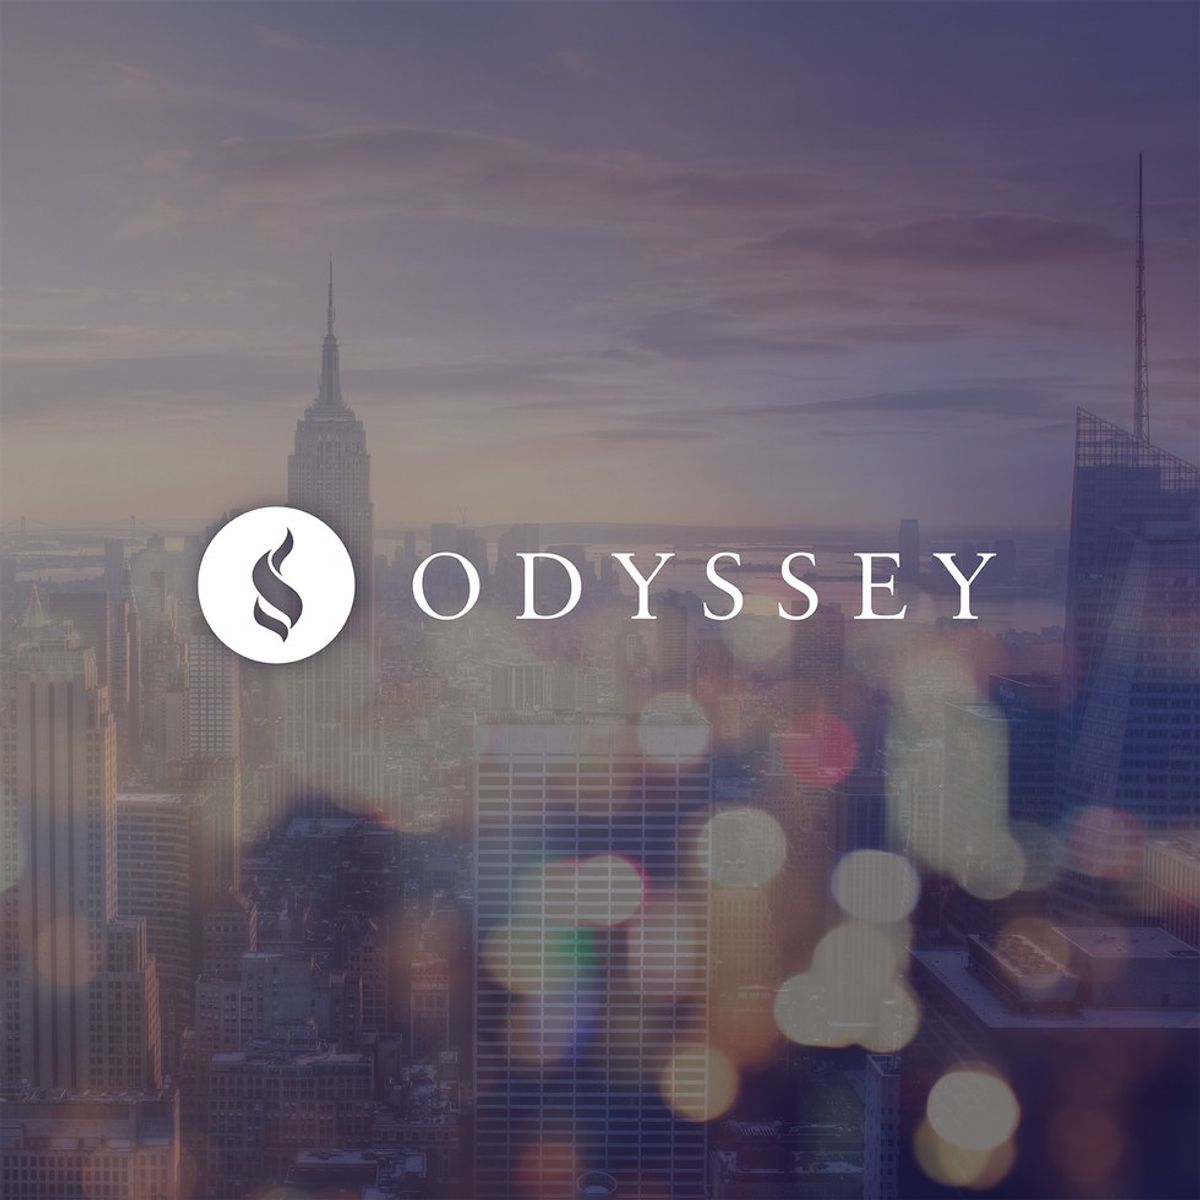 Why I Chose Odyssey